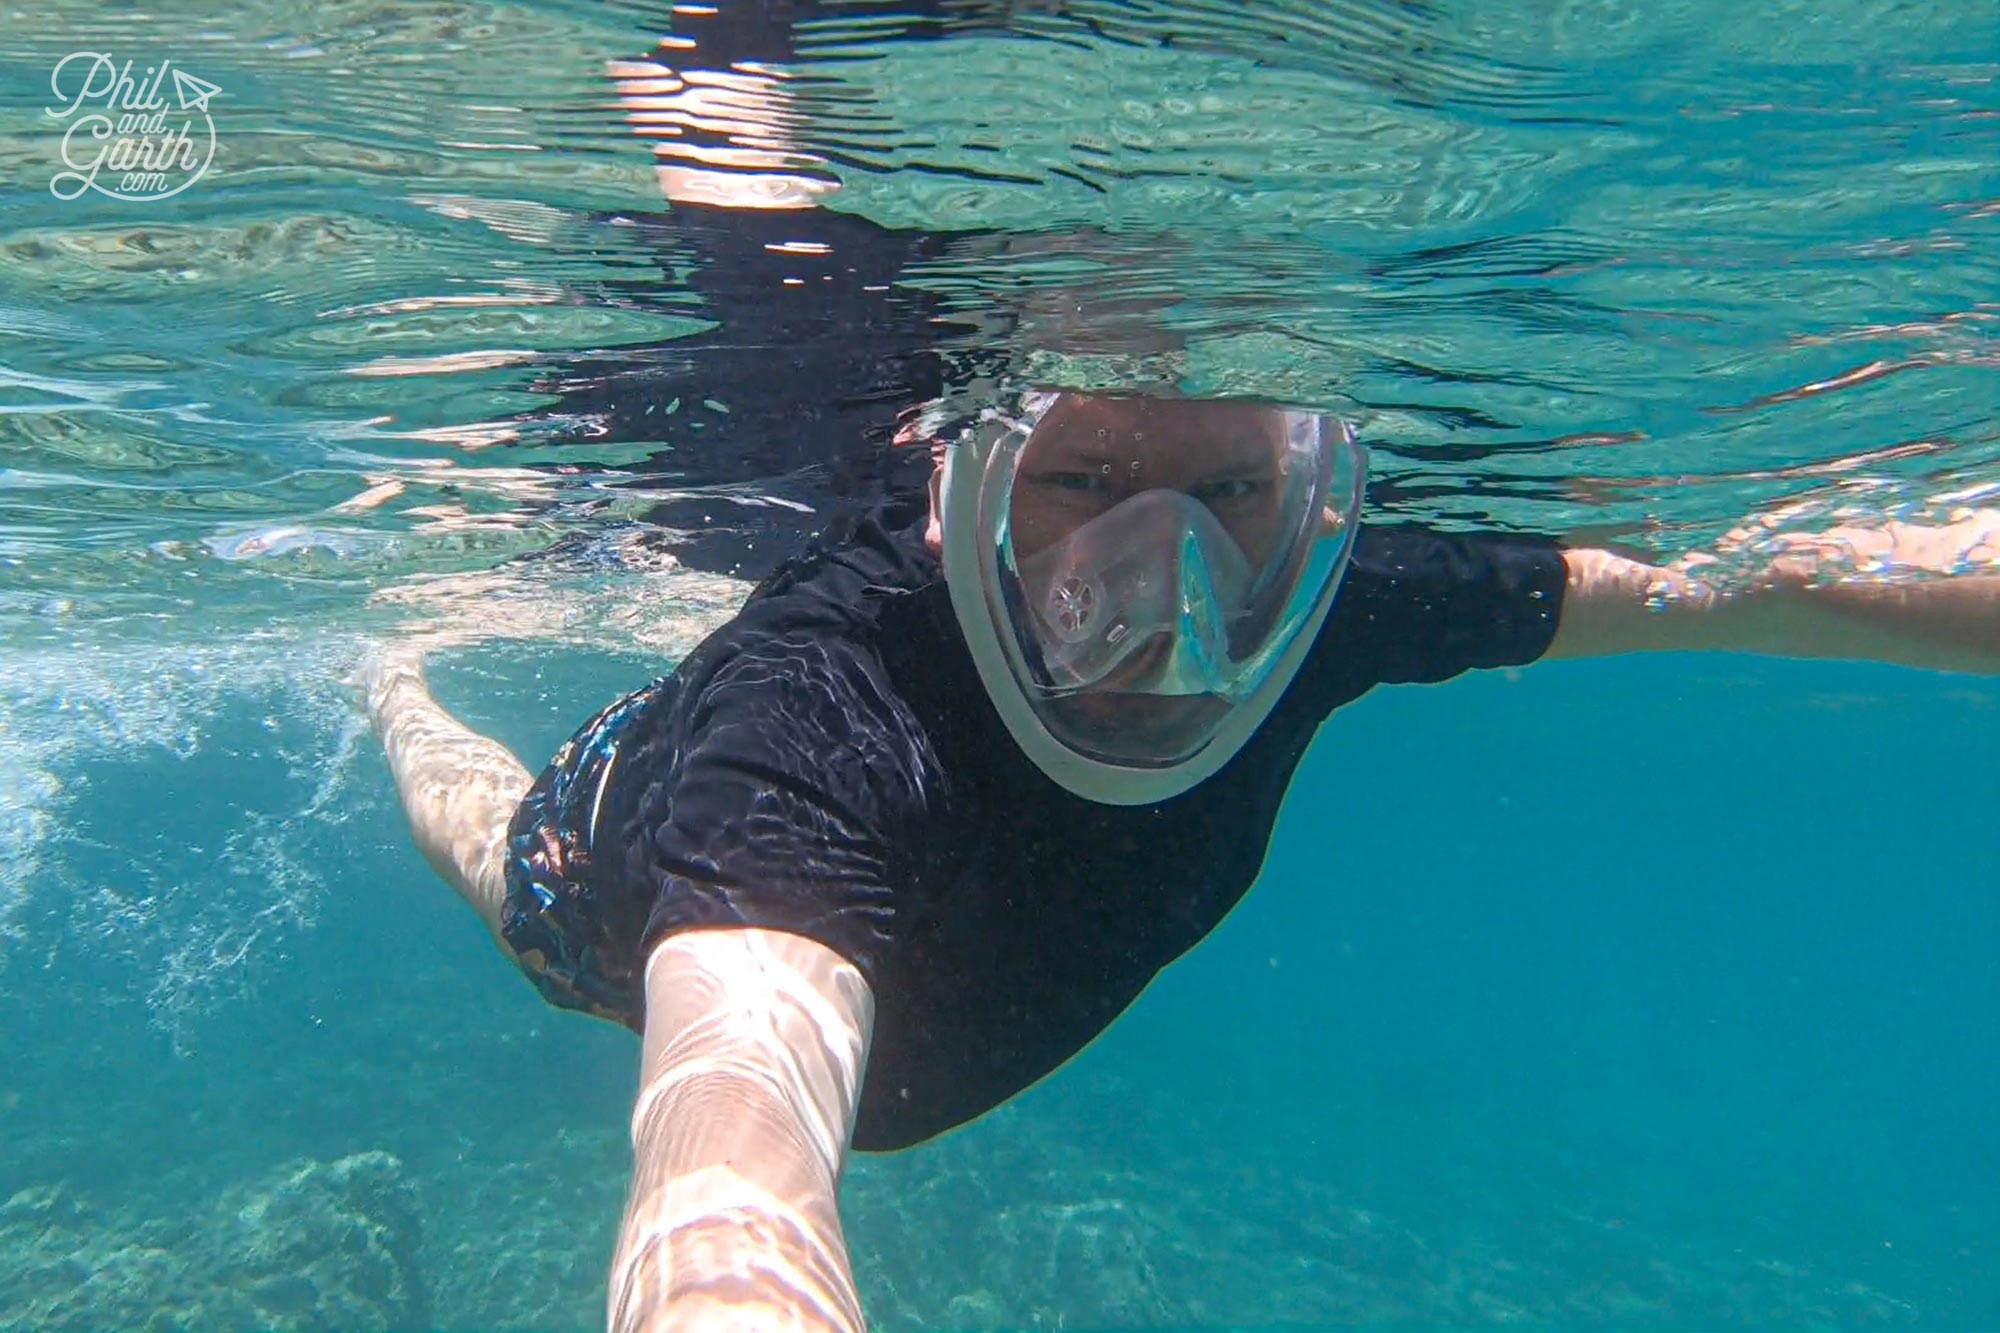 Garth snorkelling at Friar's Bay